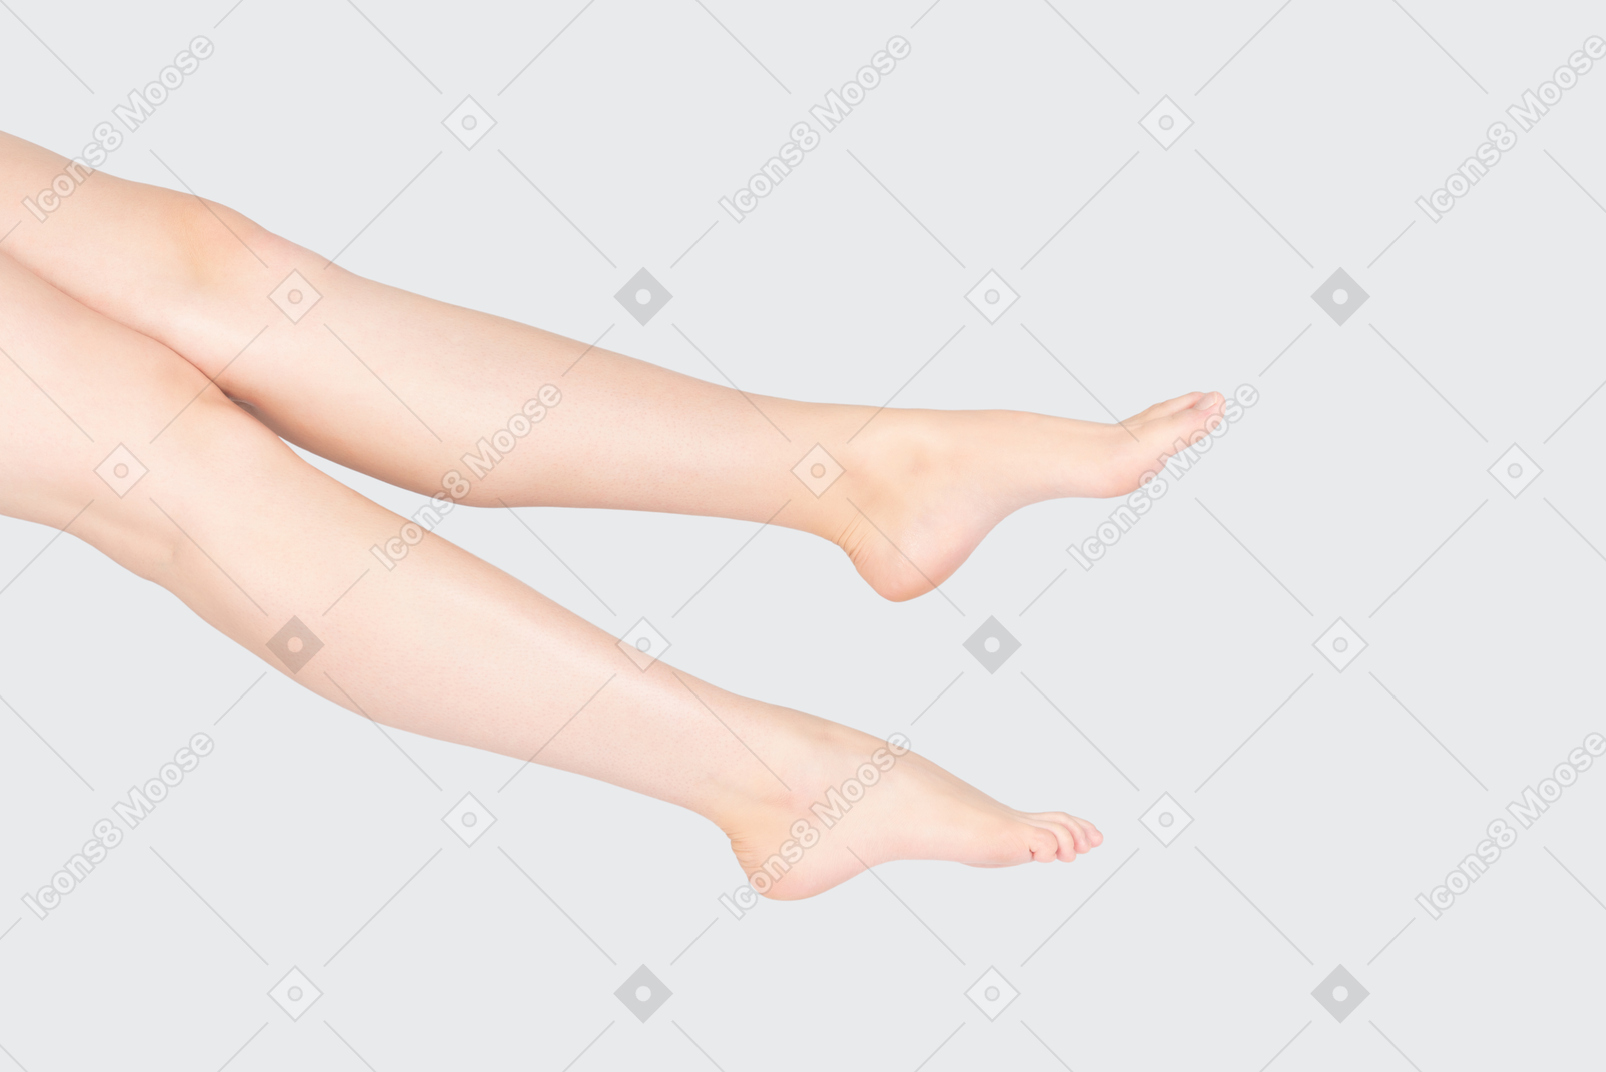 Shot of female legs crossed